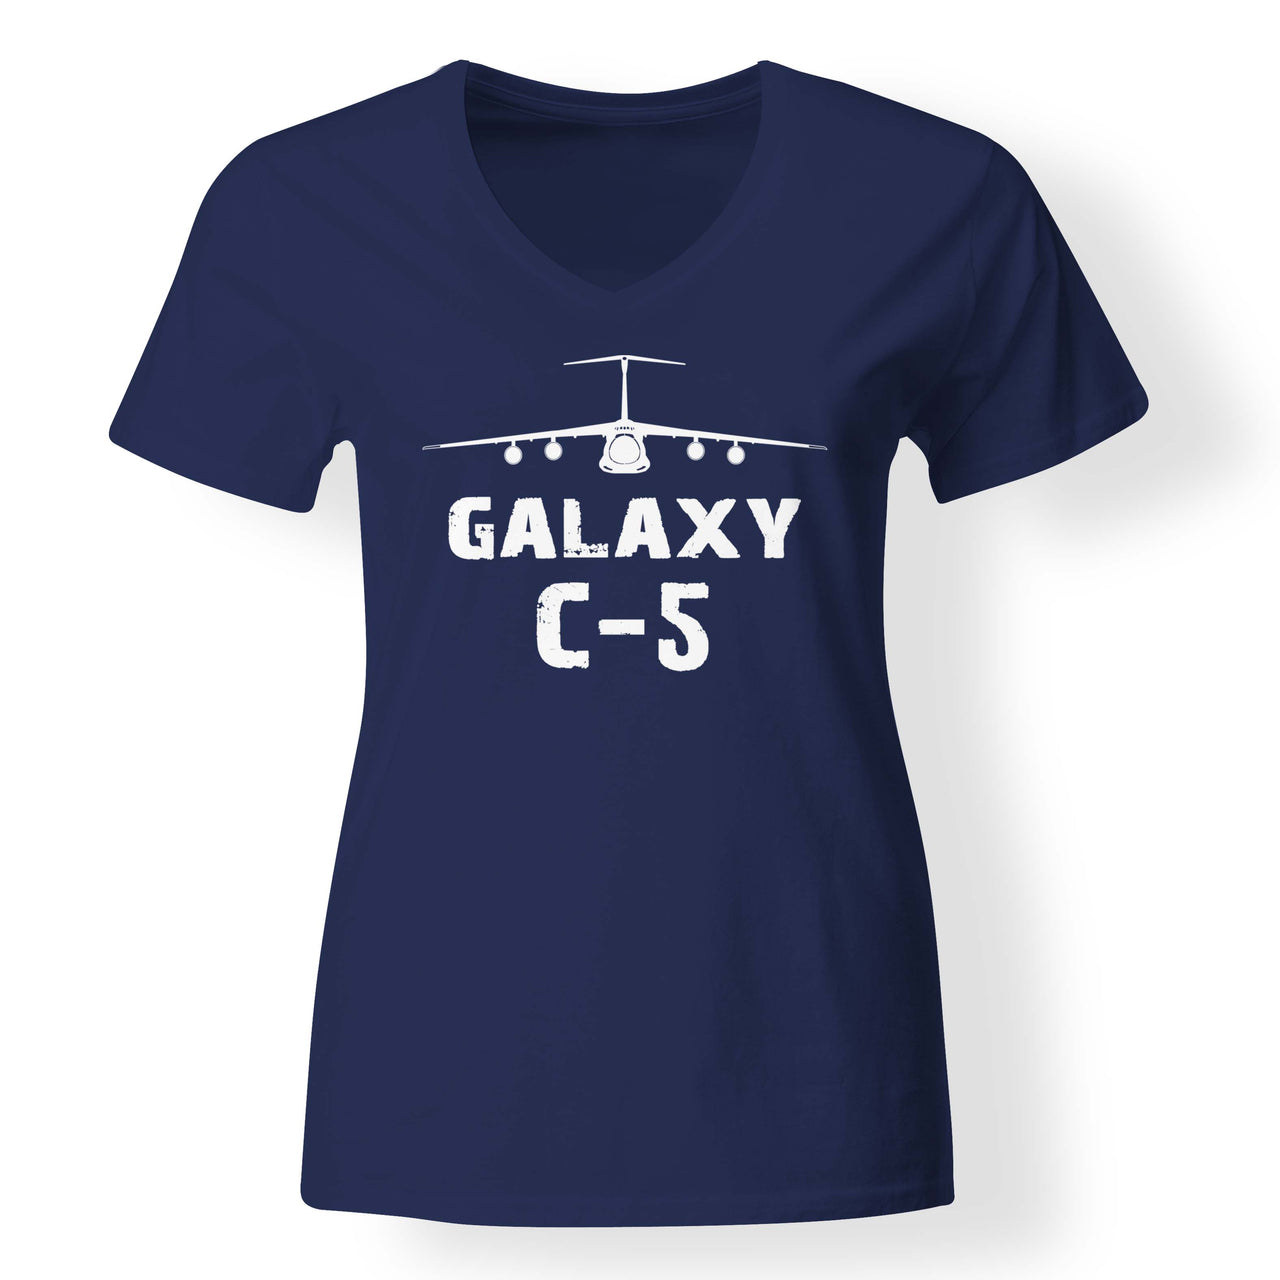 Galaxy C-5 & Plane Designed V-Neck T-Shirts